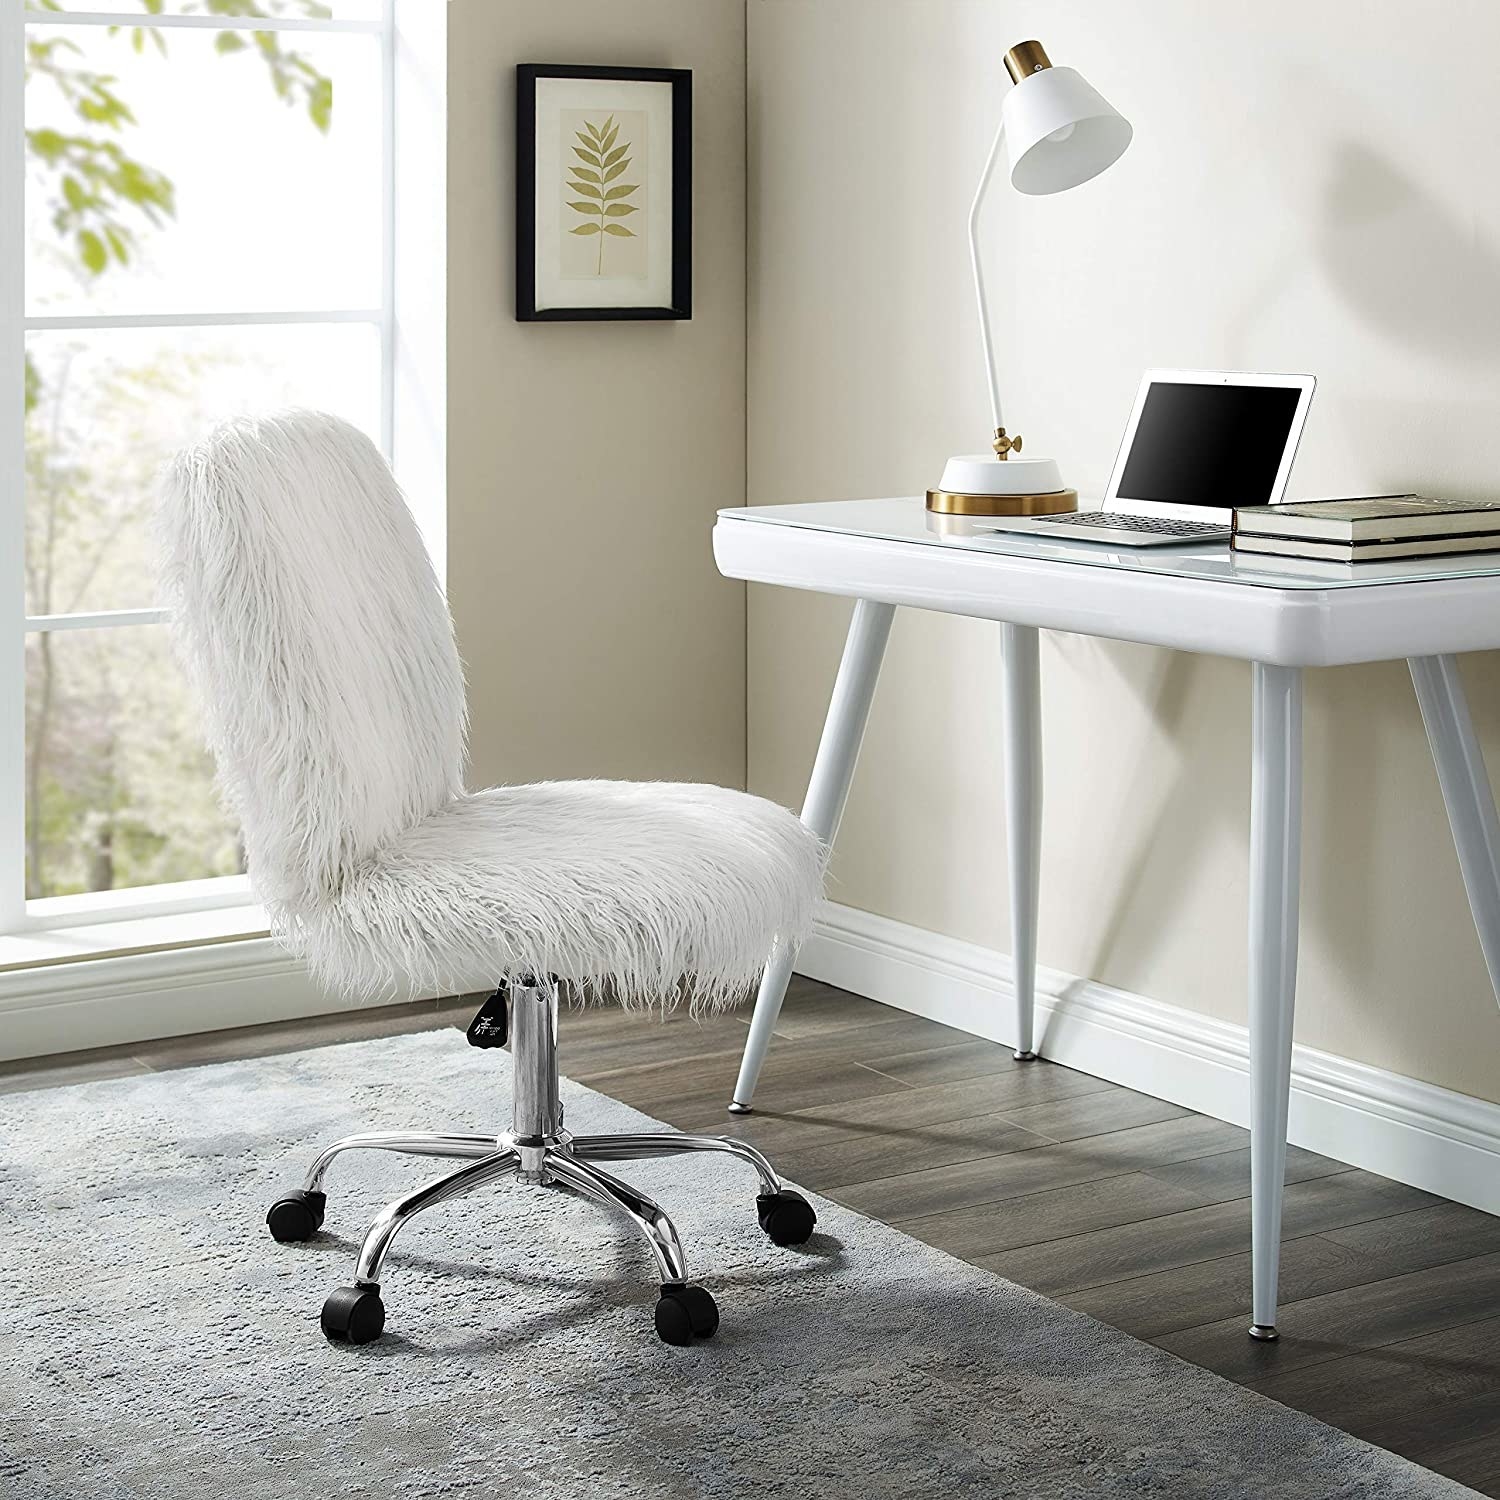 White faux fur desk chair in front of white desk